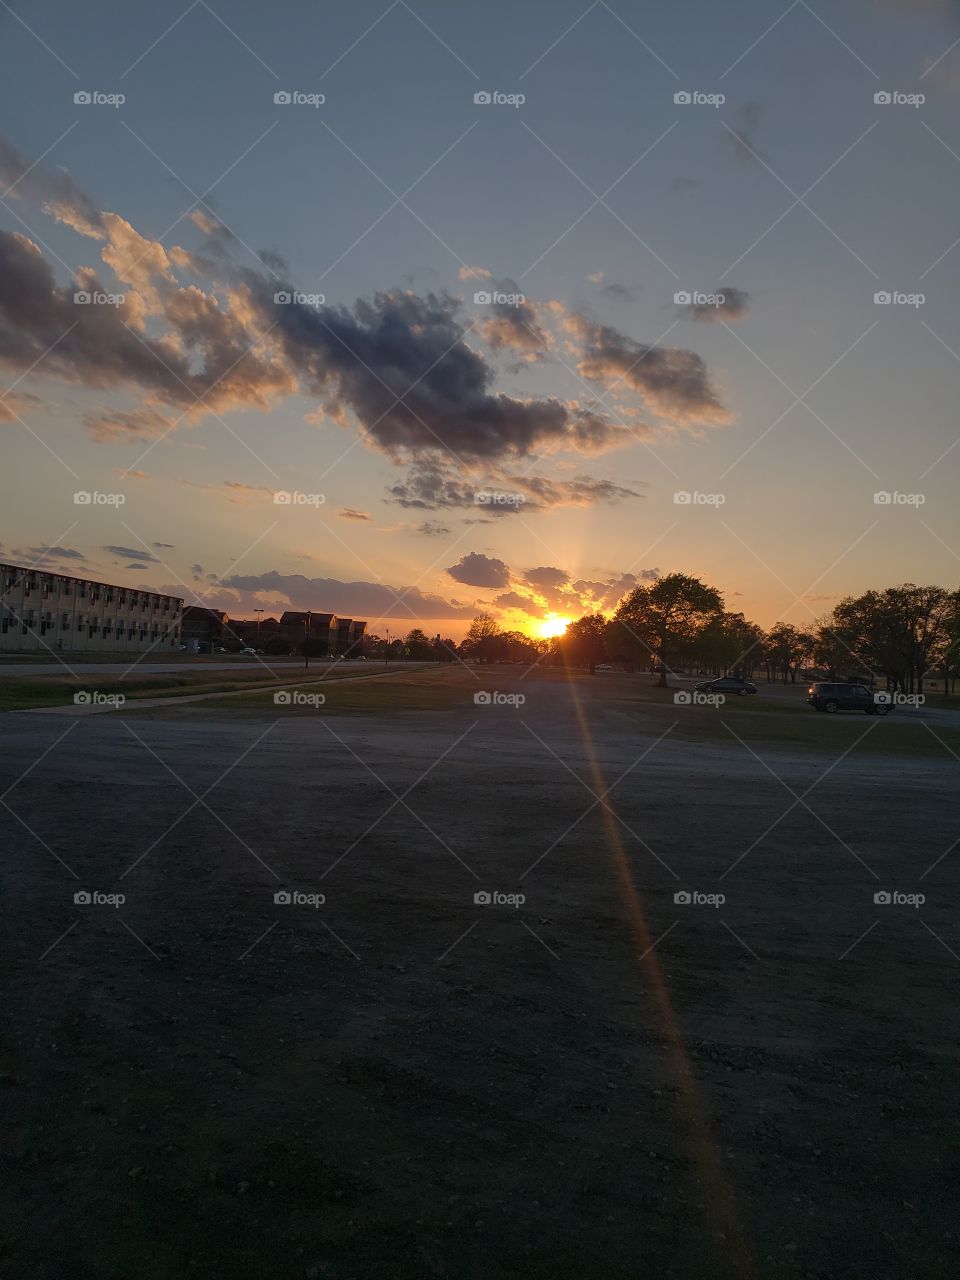 Sunsets at Fort Gordon